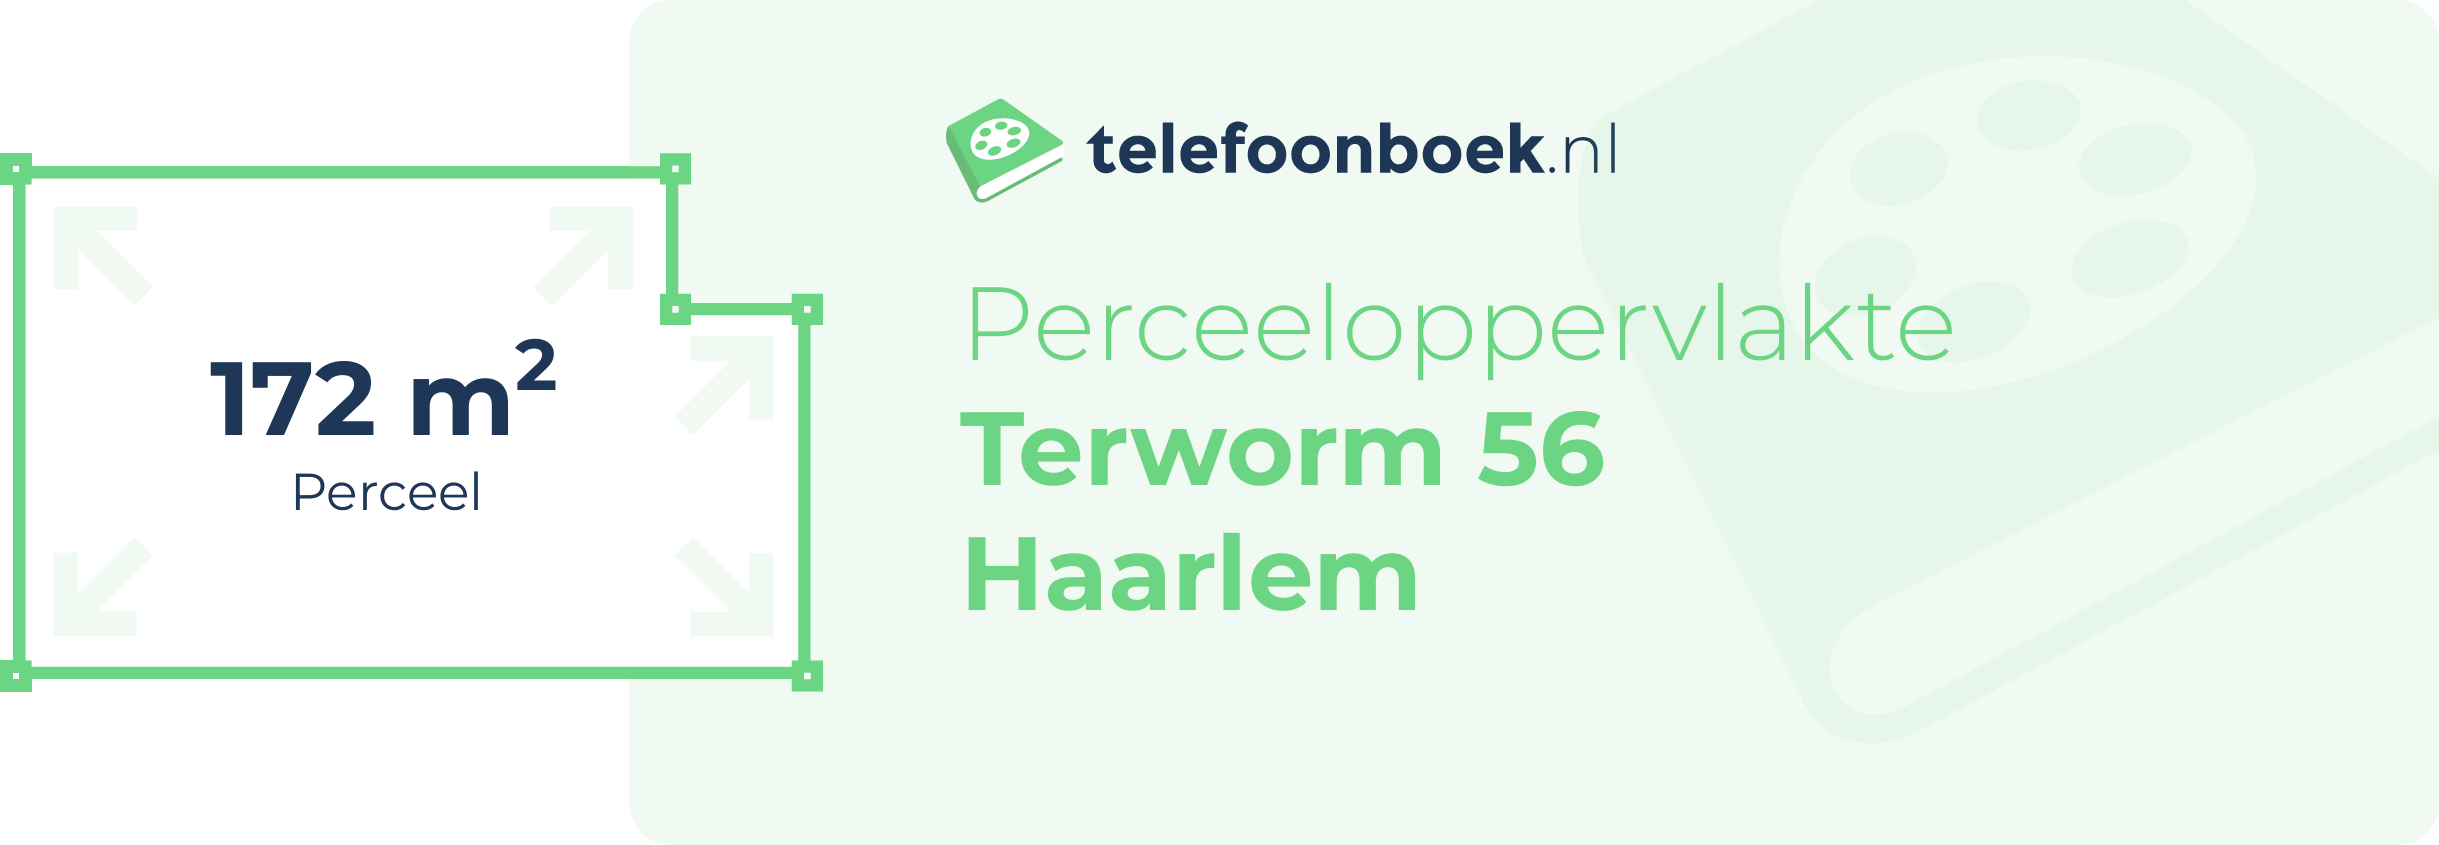 Perceeloppervlakte Terworm 56 Haarlem